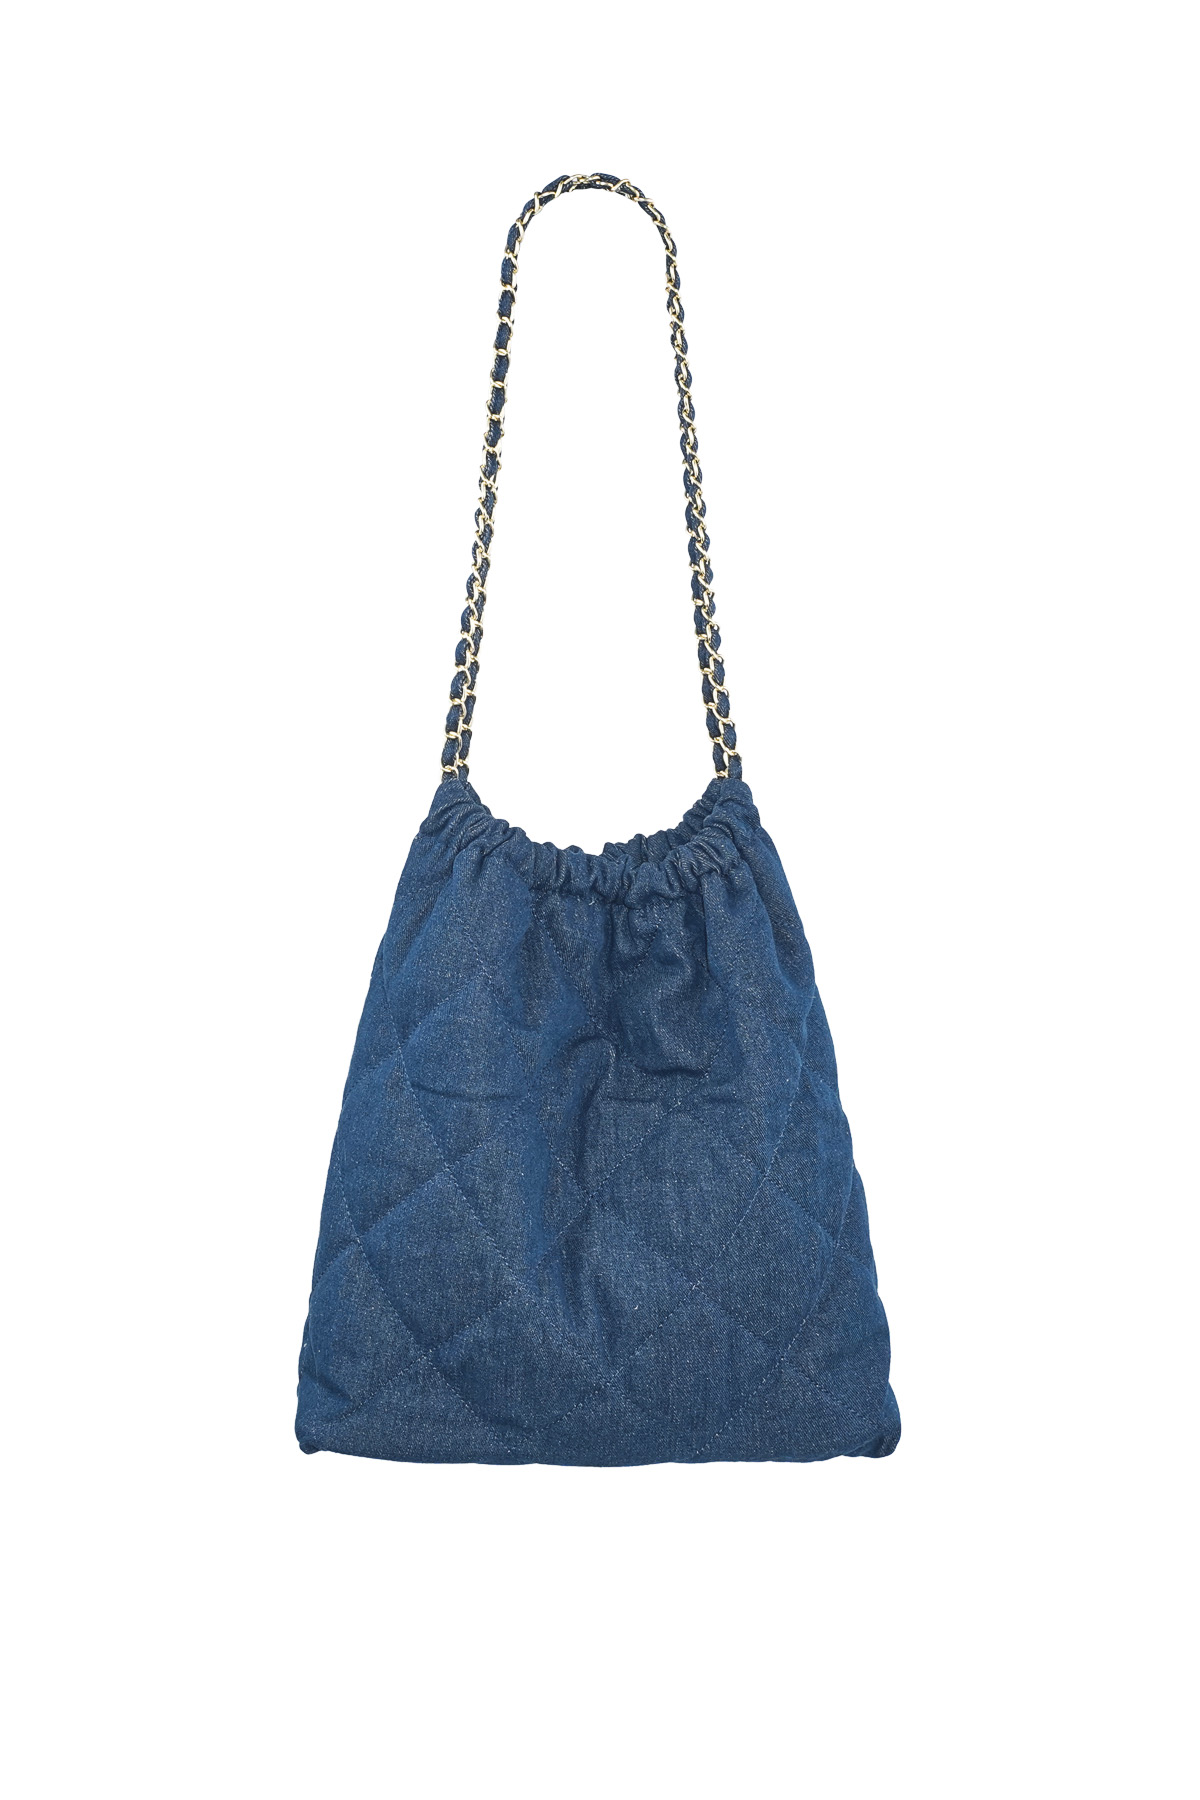 Denim bag with stitched motif and chain - medium dark blue